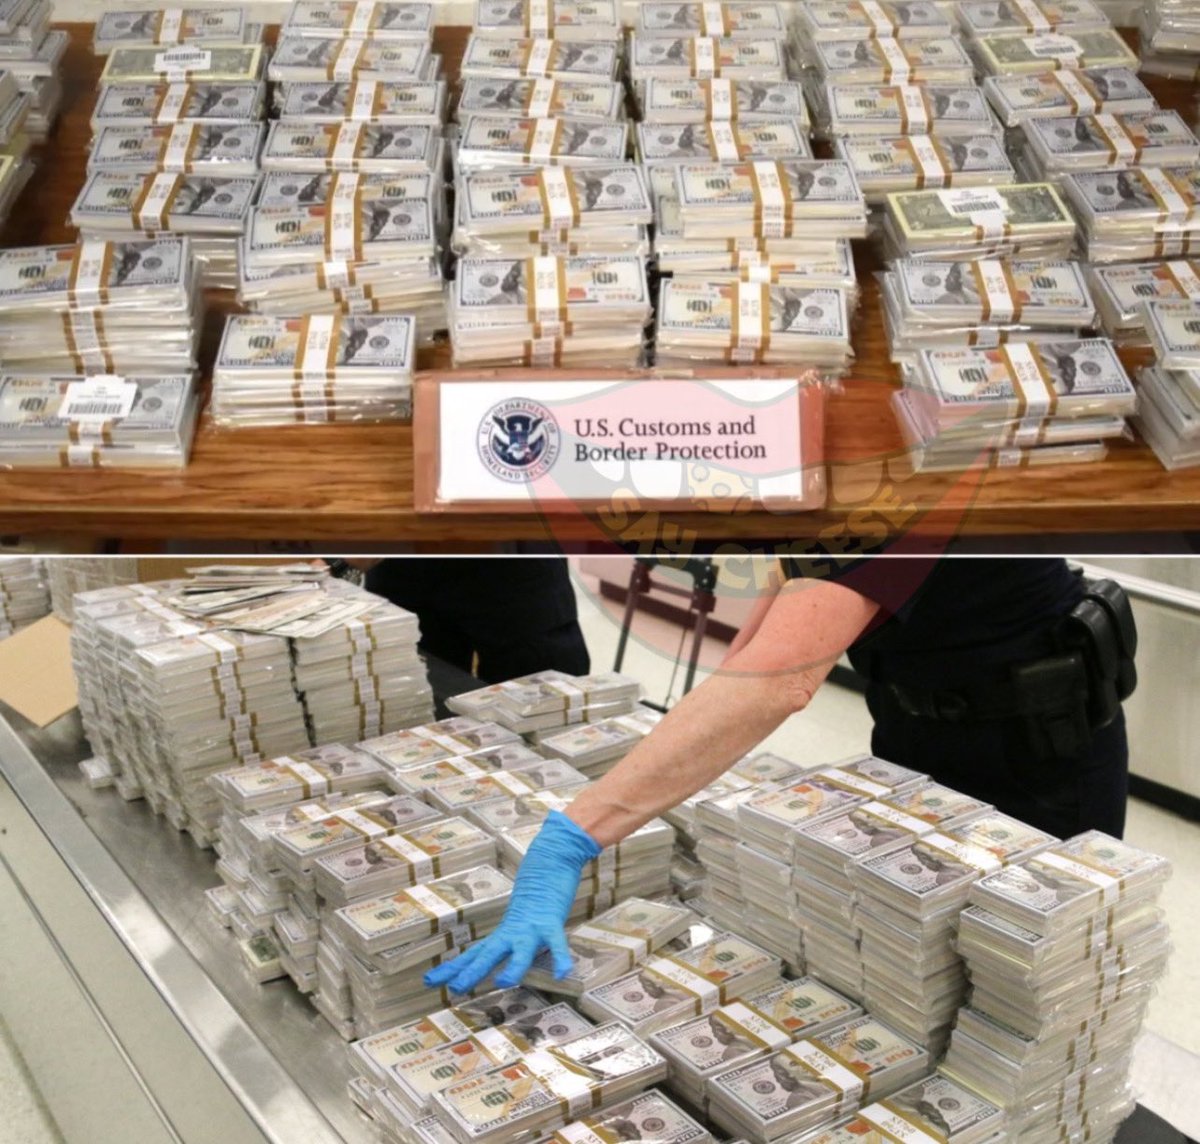 Over $14M in counterfeit money seized in Philadelphia